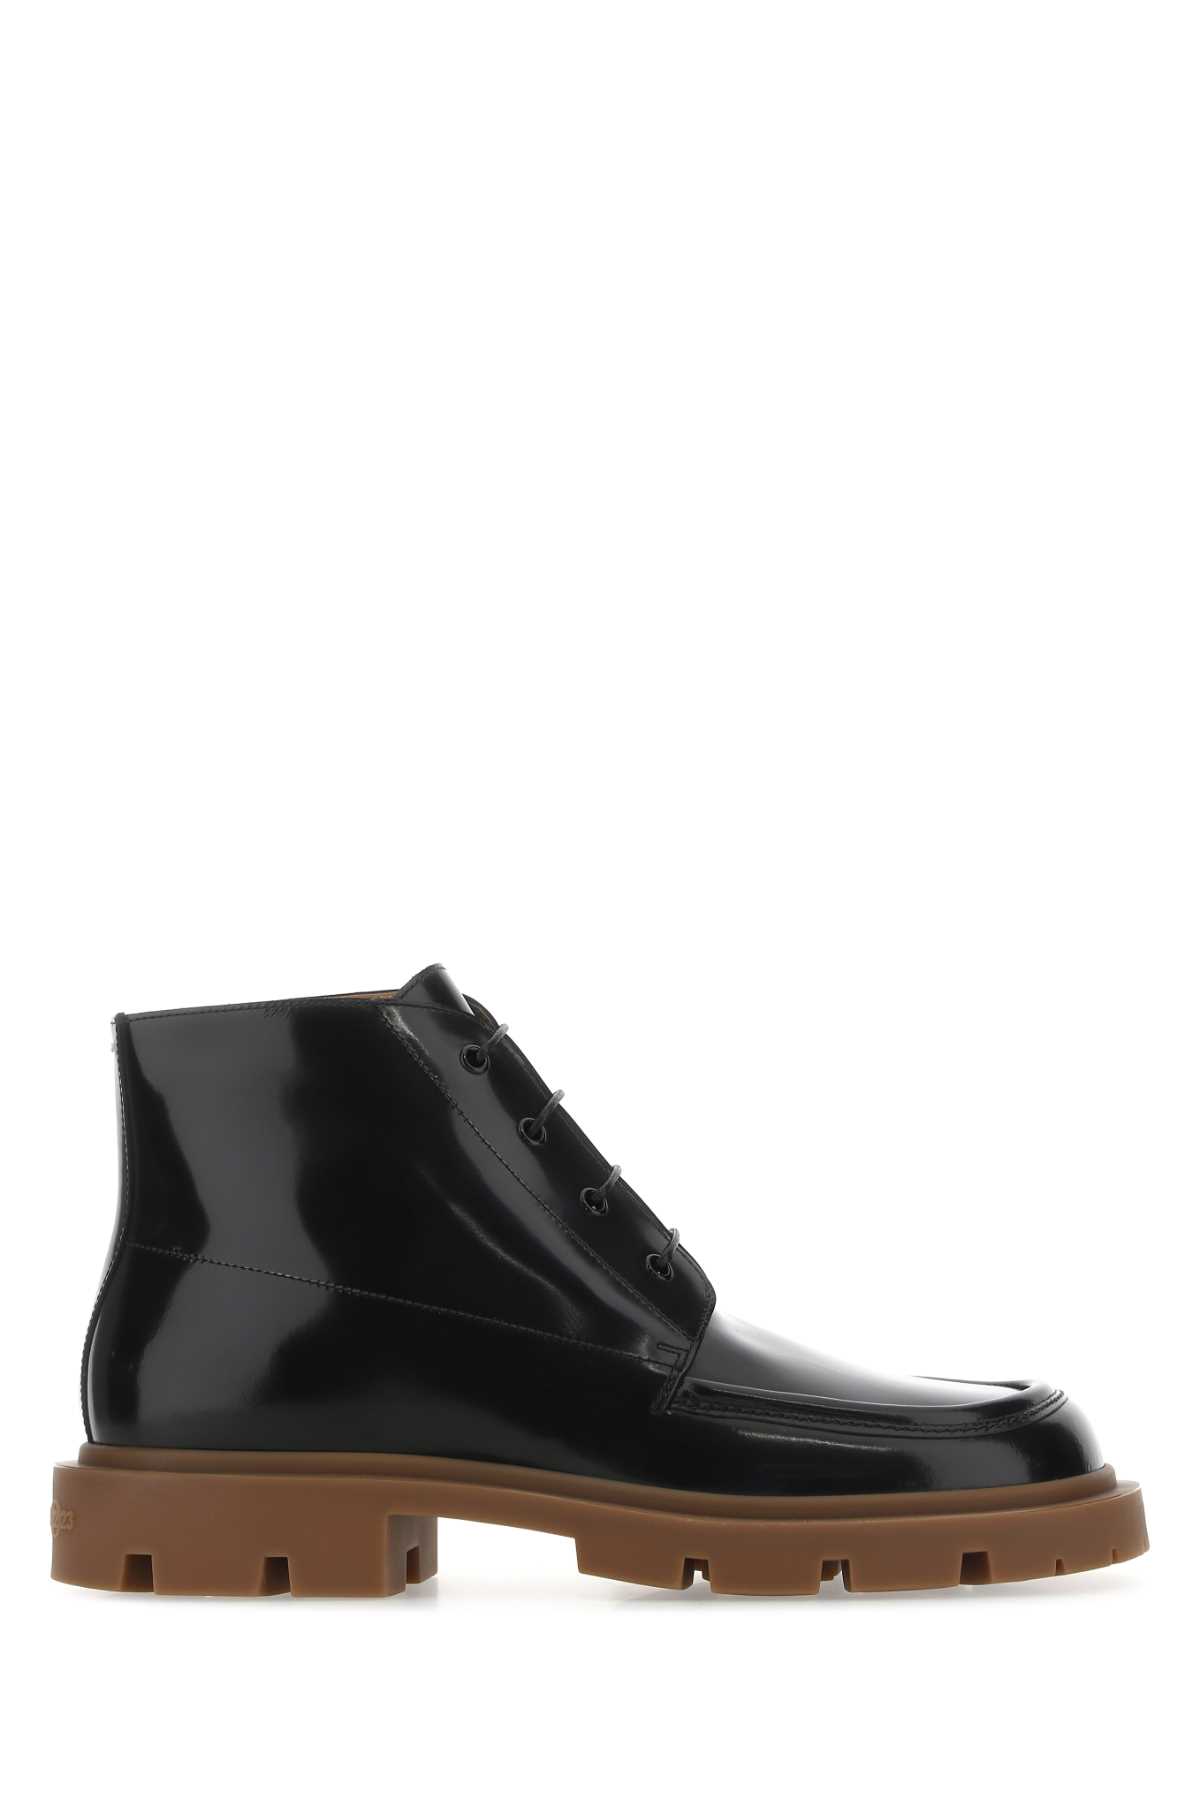 Shop Maison Margiela Black Leather Ankle Boots In H9417